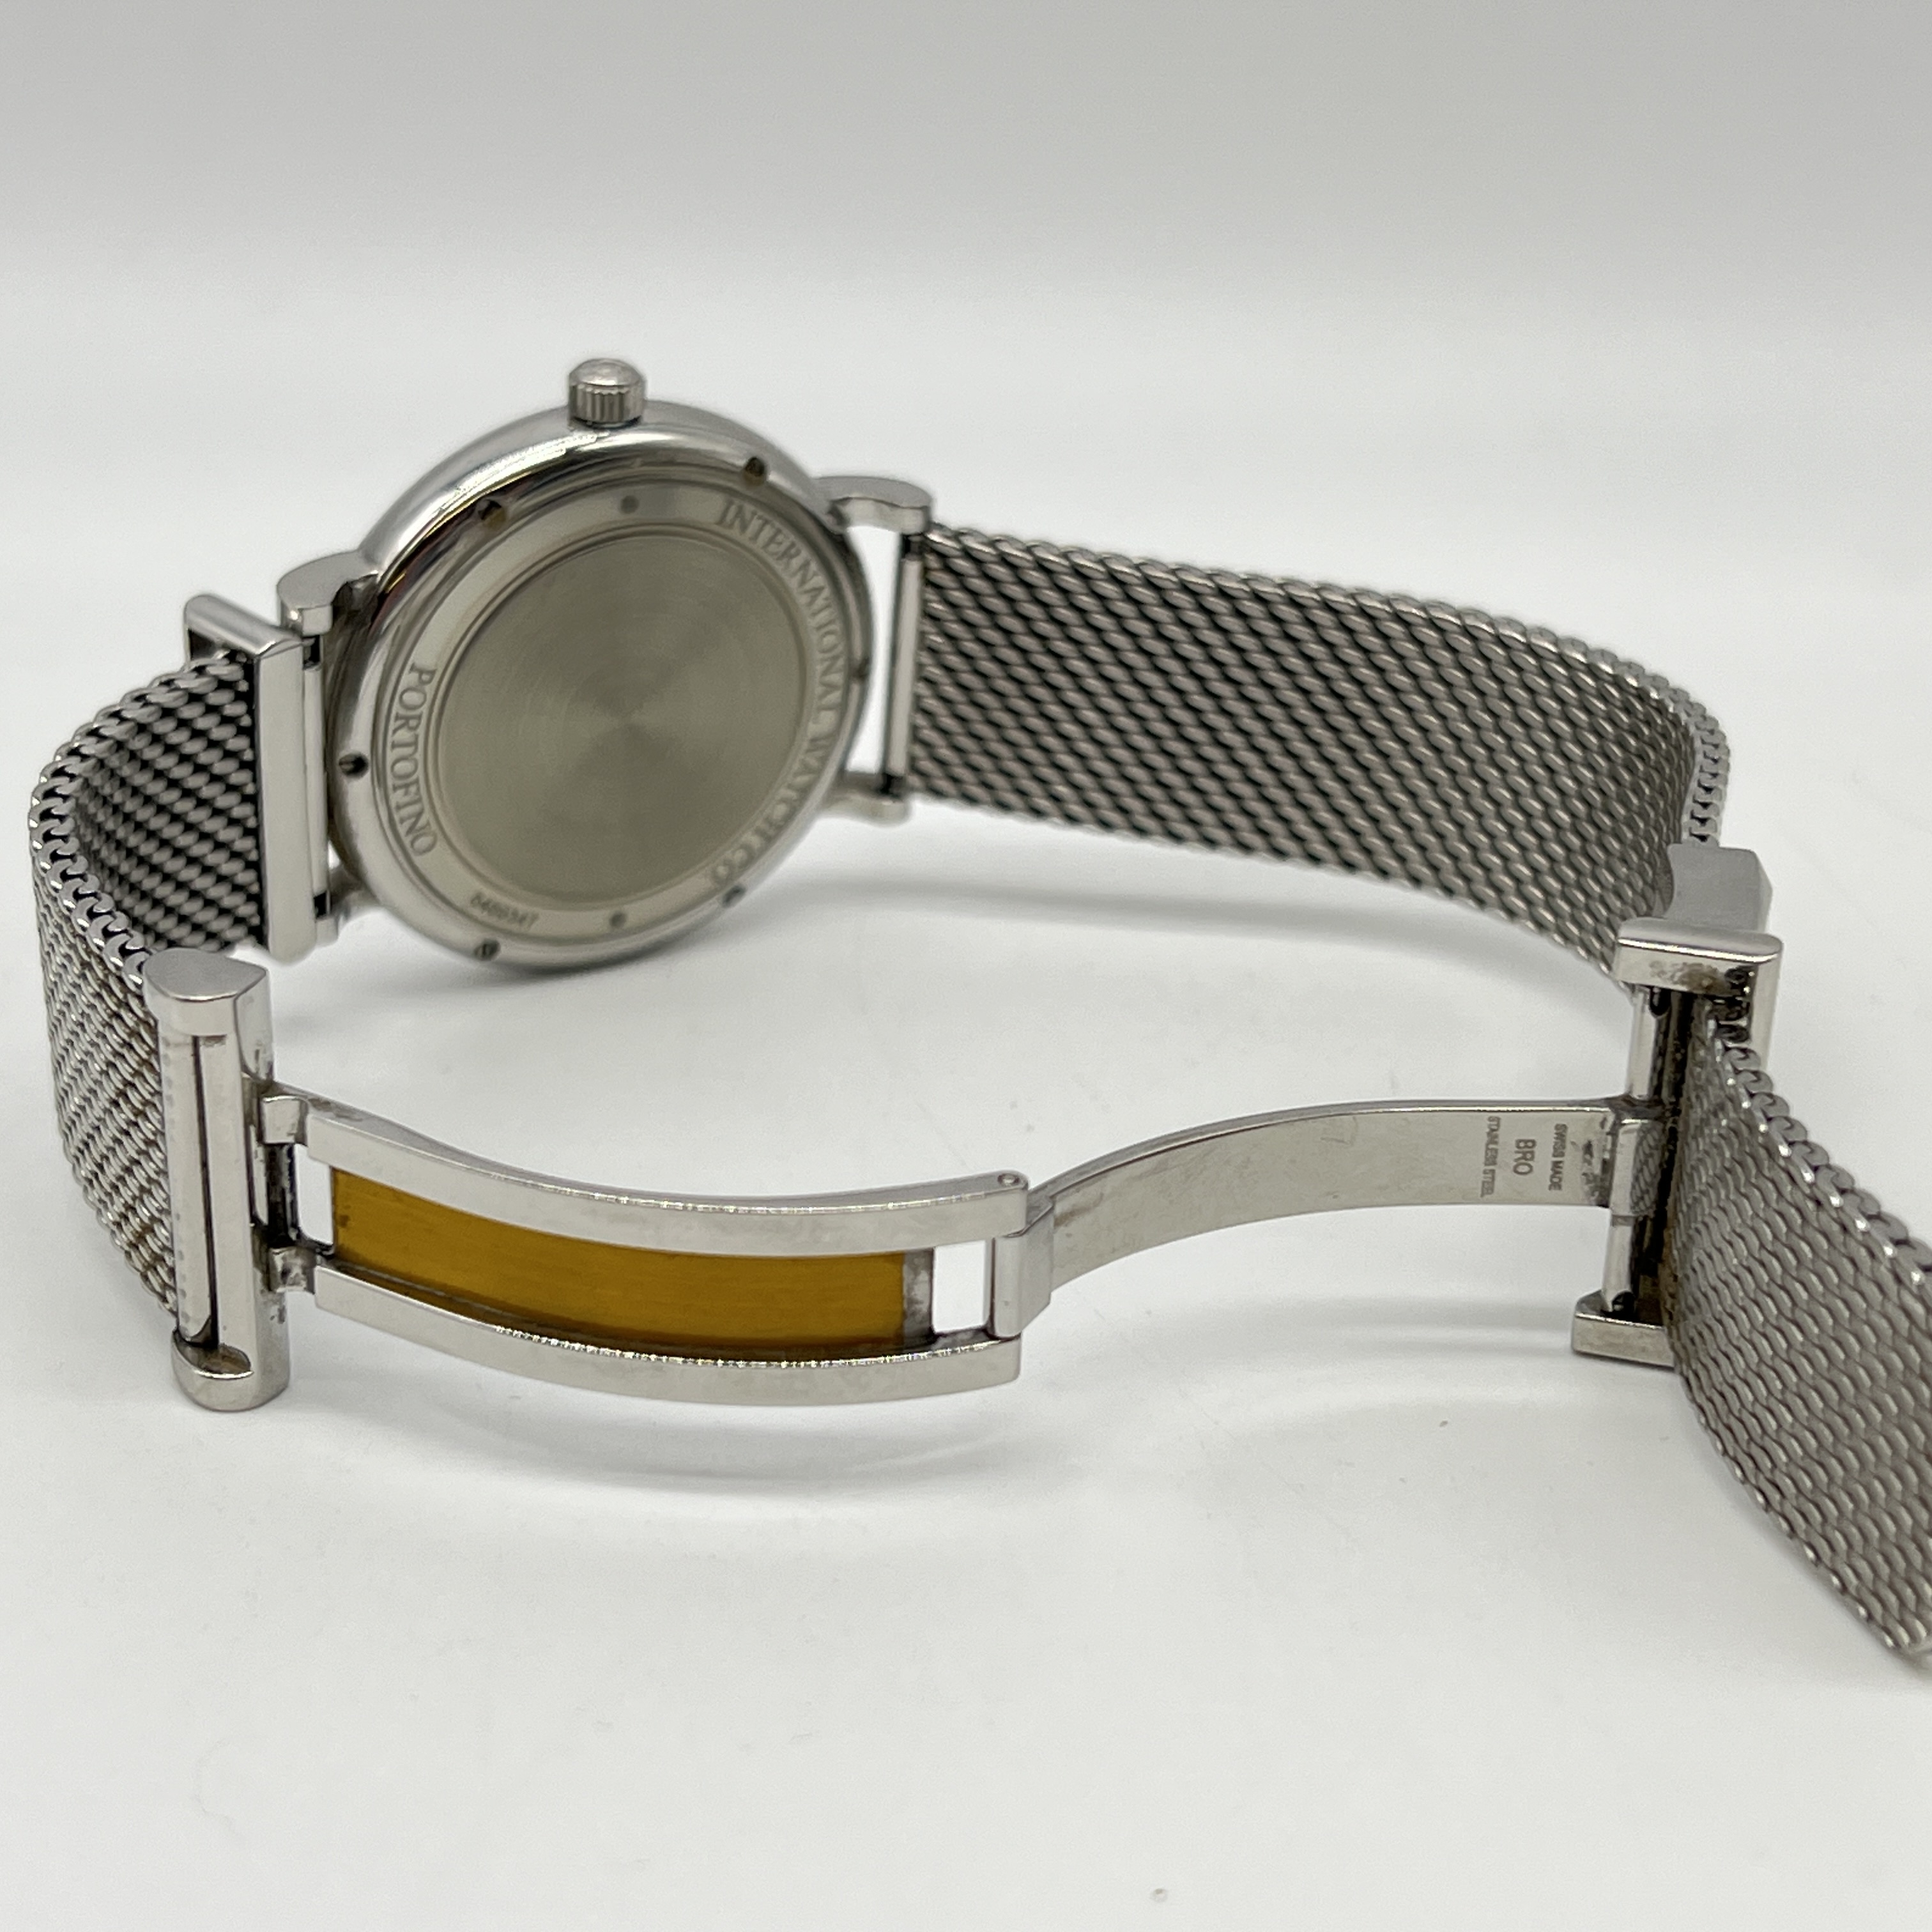 A Gents IWC Schaffhausen Portofino Automatic Watch - Image 8 of 11